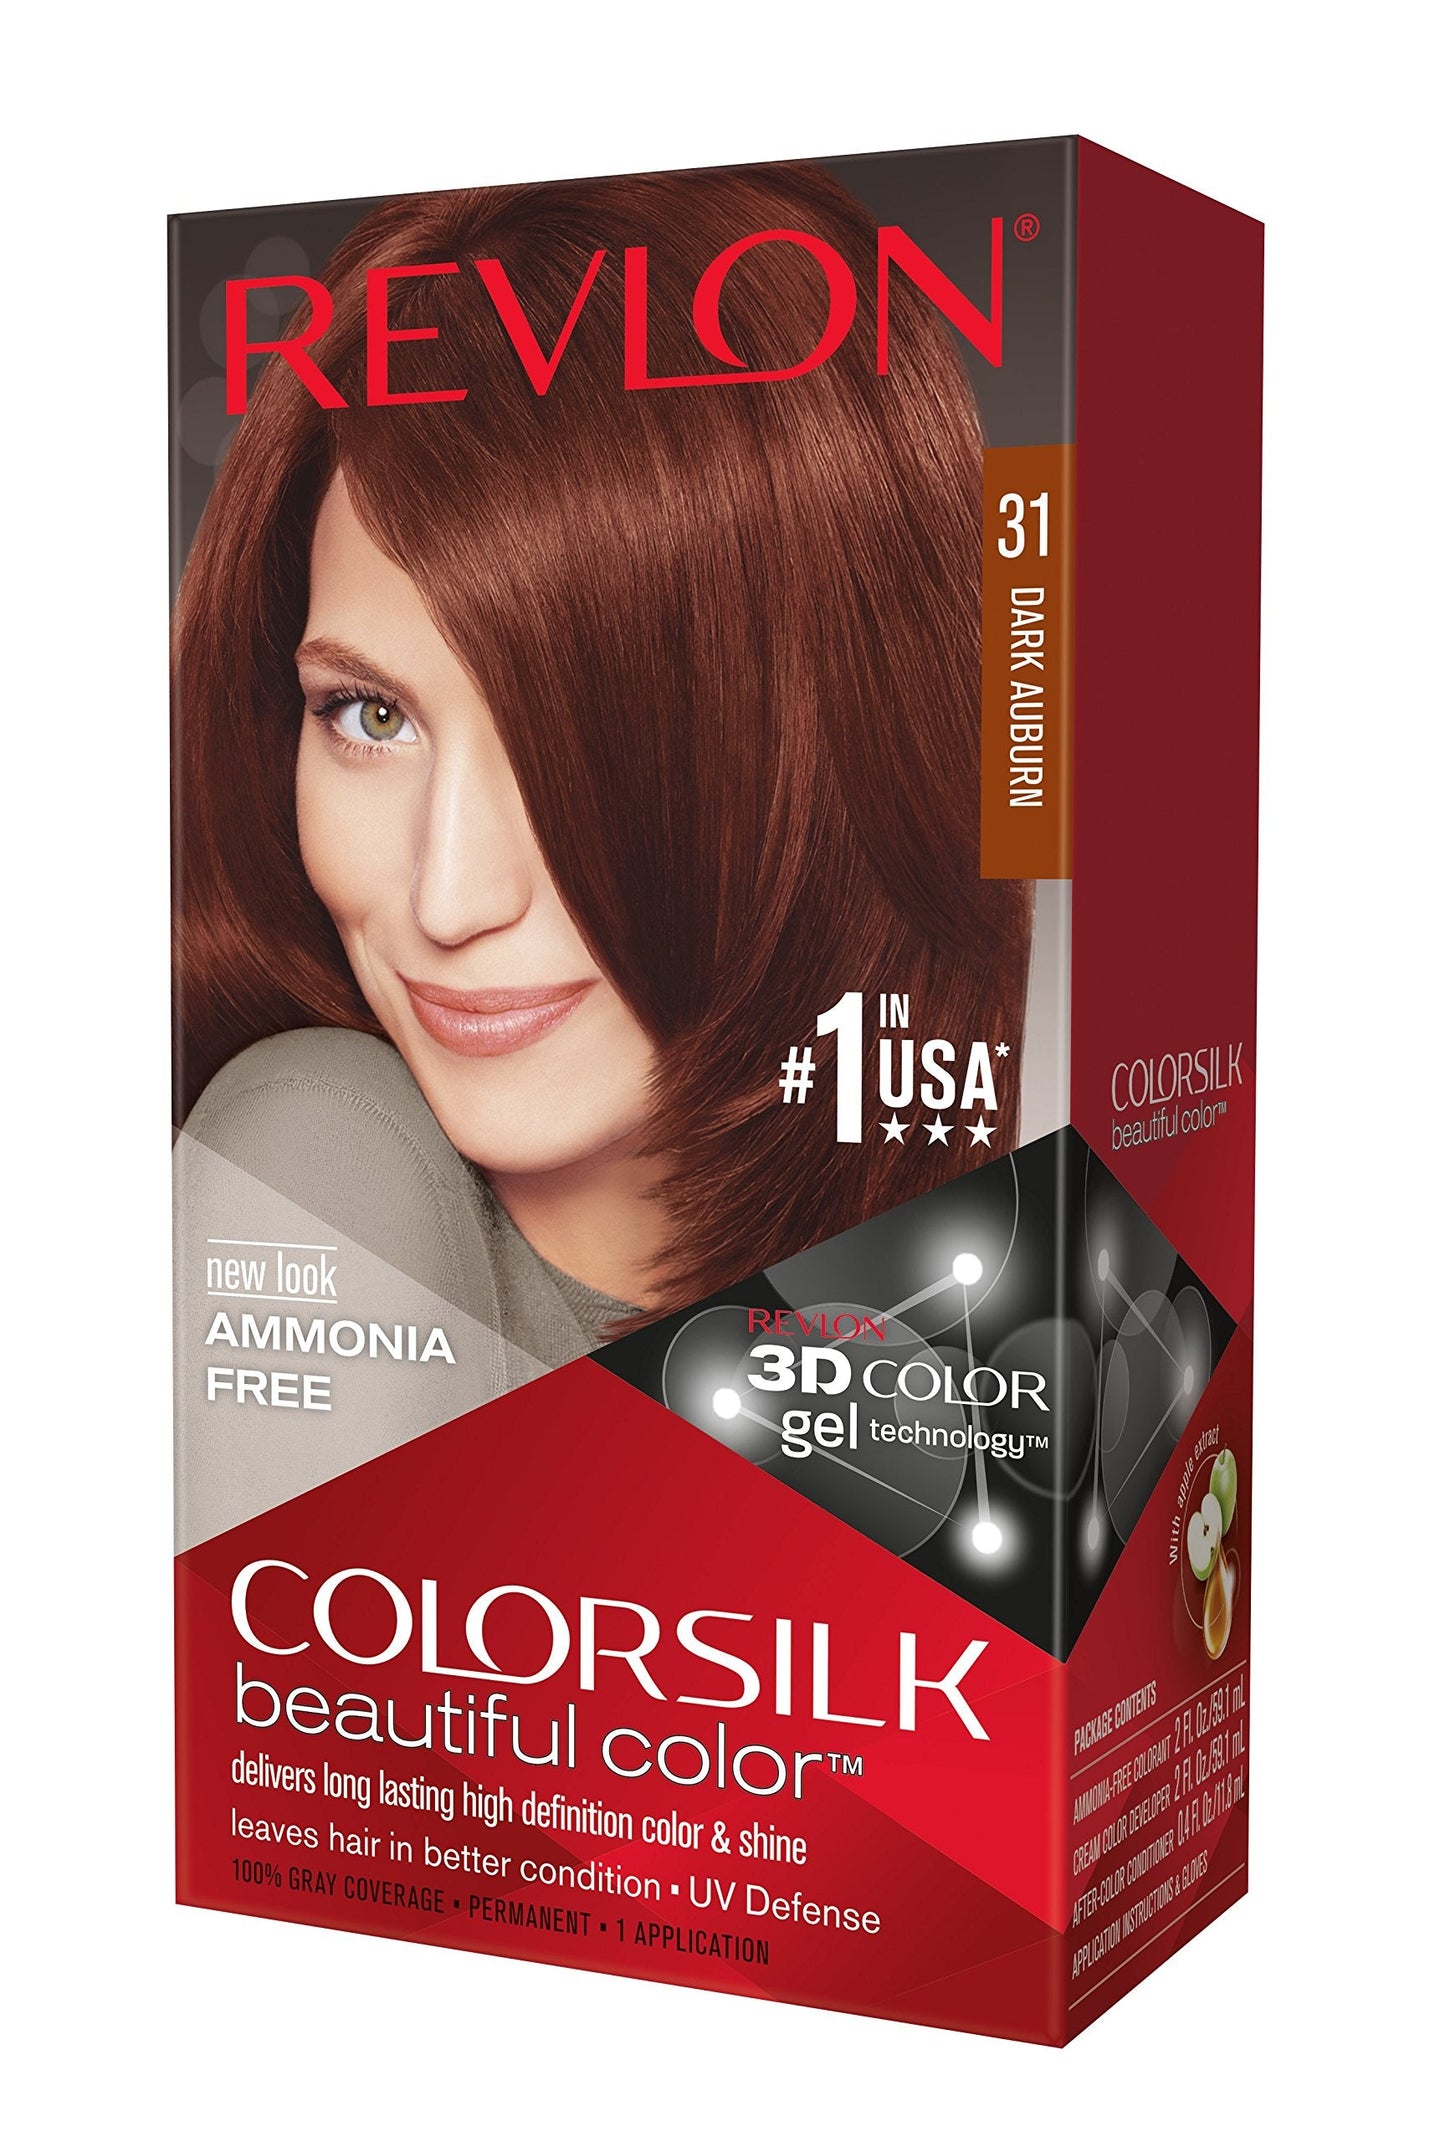 Revlon Colorsilk Hair Color 31 Dark Auburn USA - 1ct/3PK